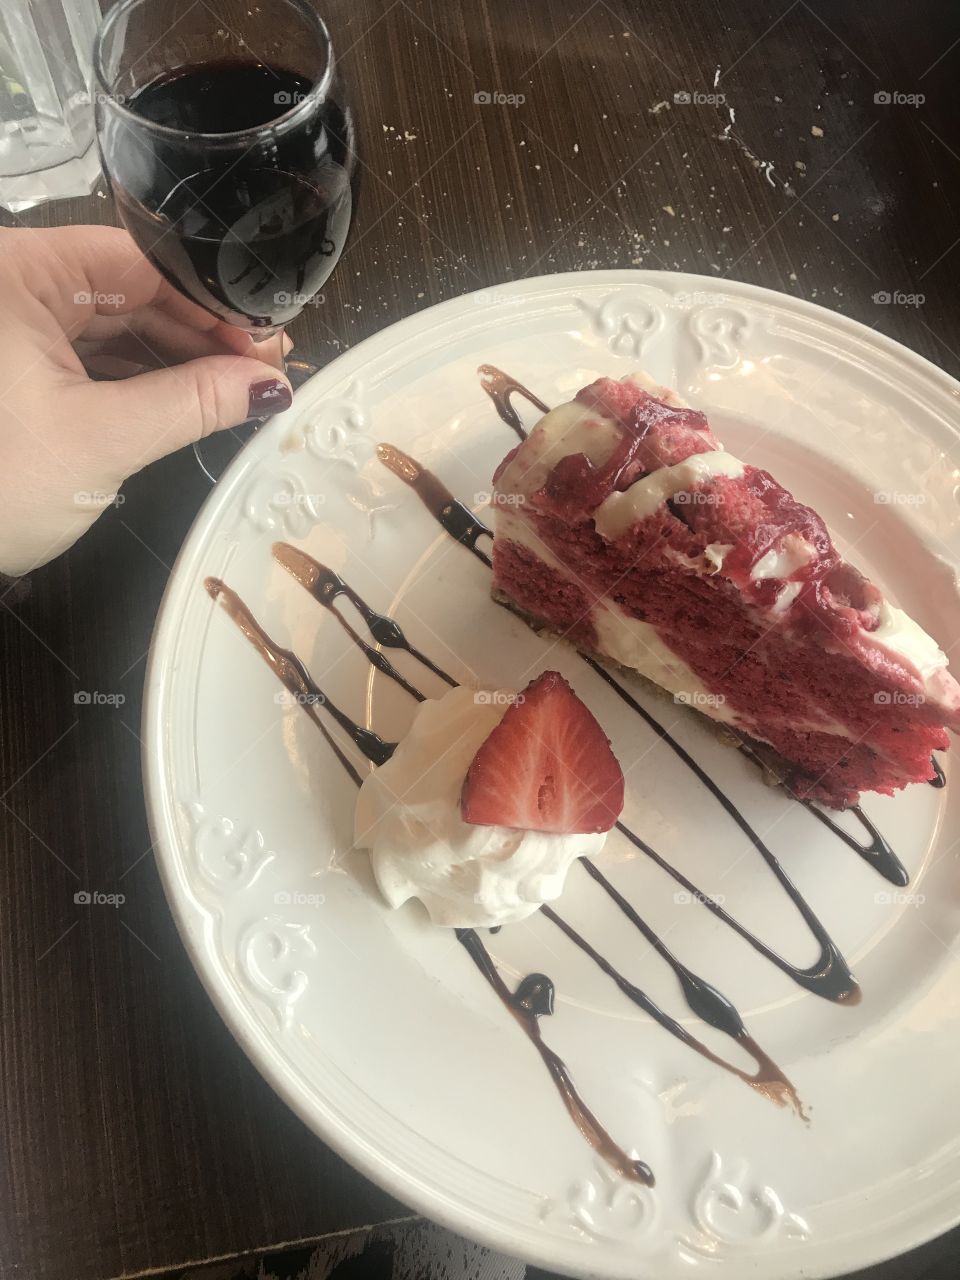 Cheesecake and sweet wine for desert. 